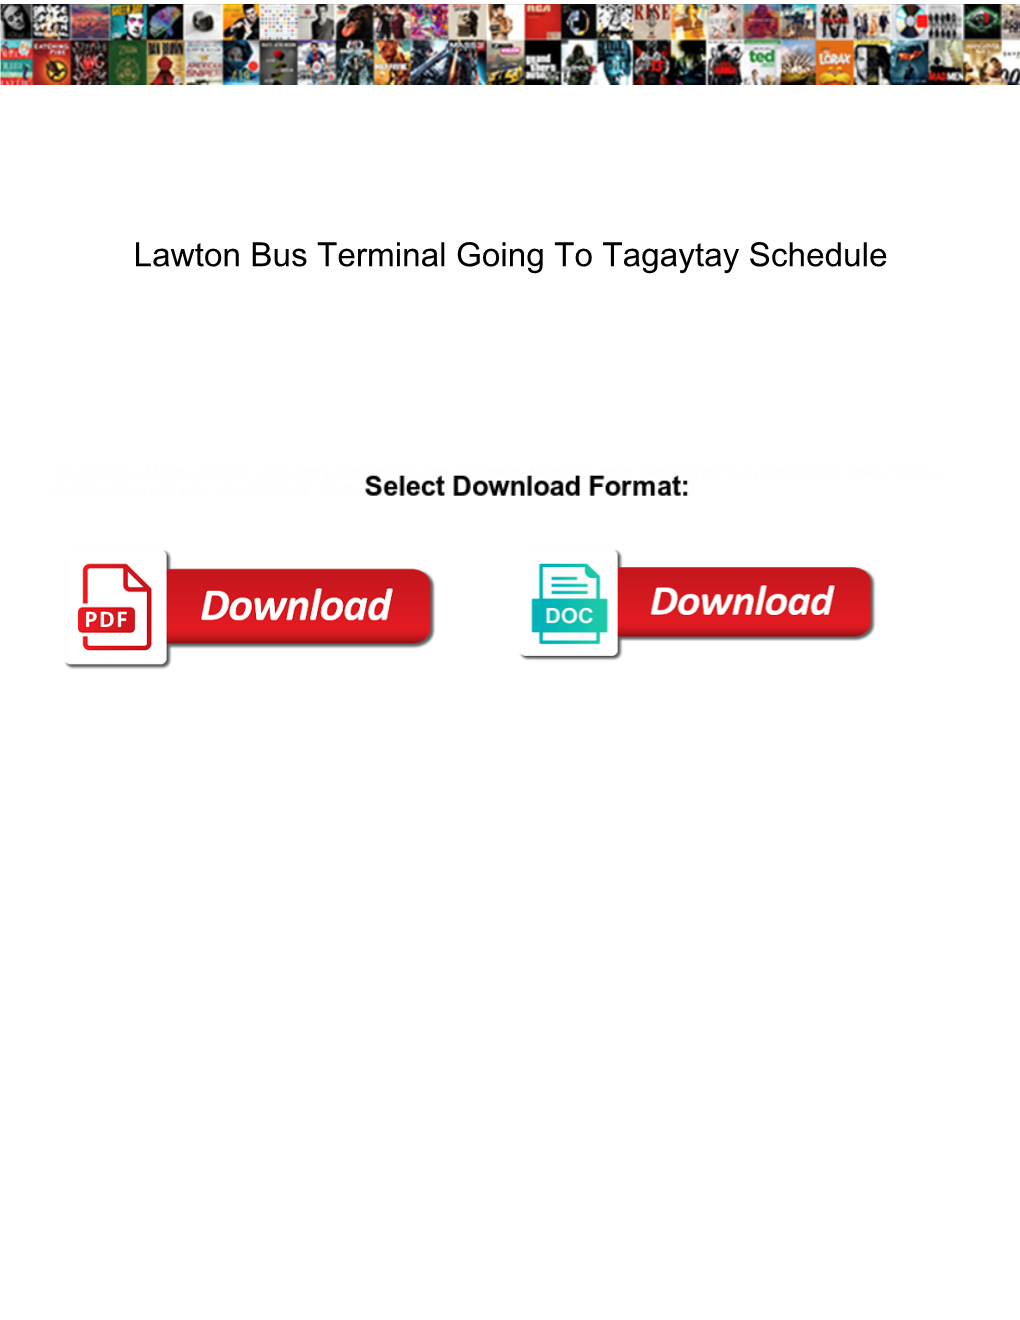 Lawton Bus Terminal Going to Tagaytay Schedule